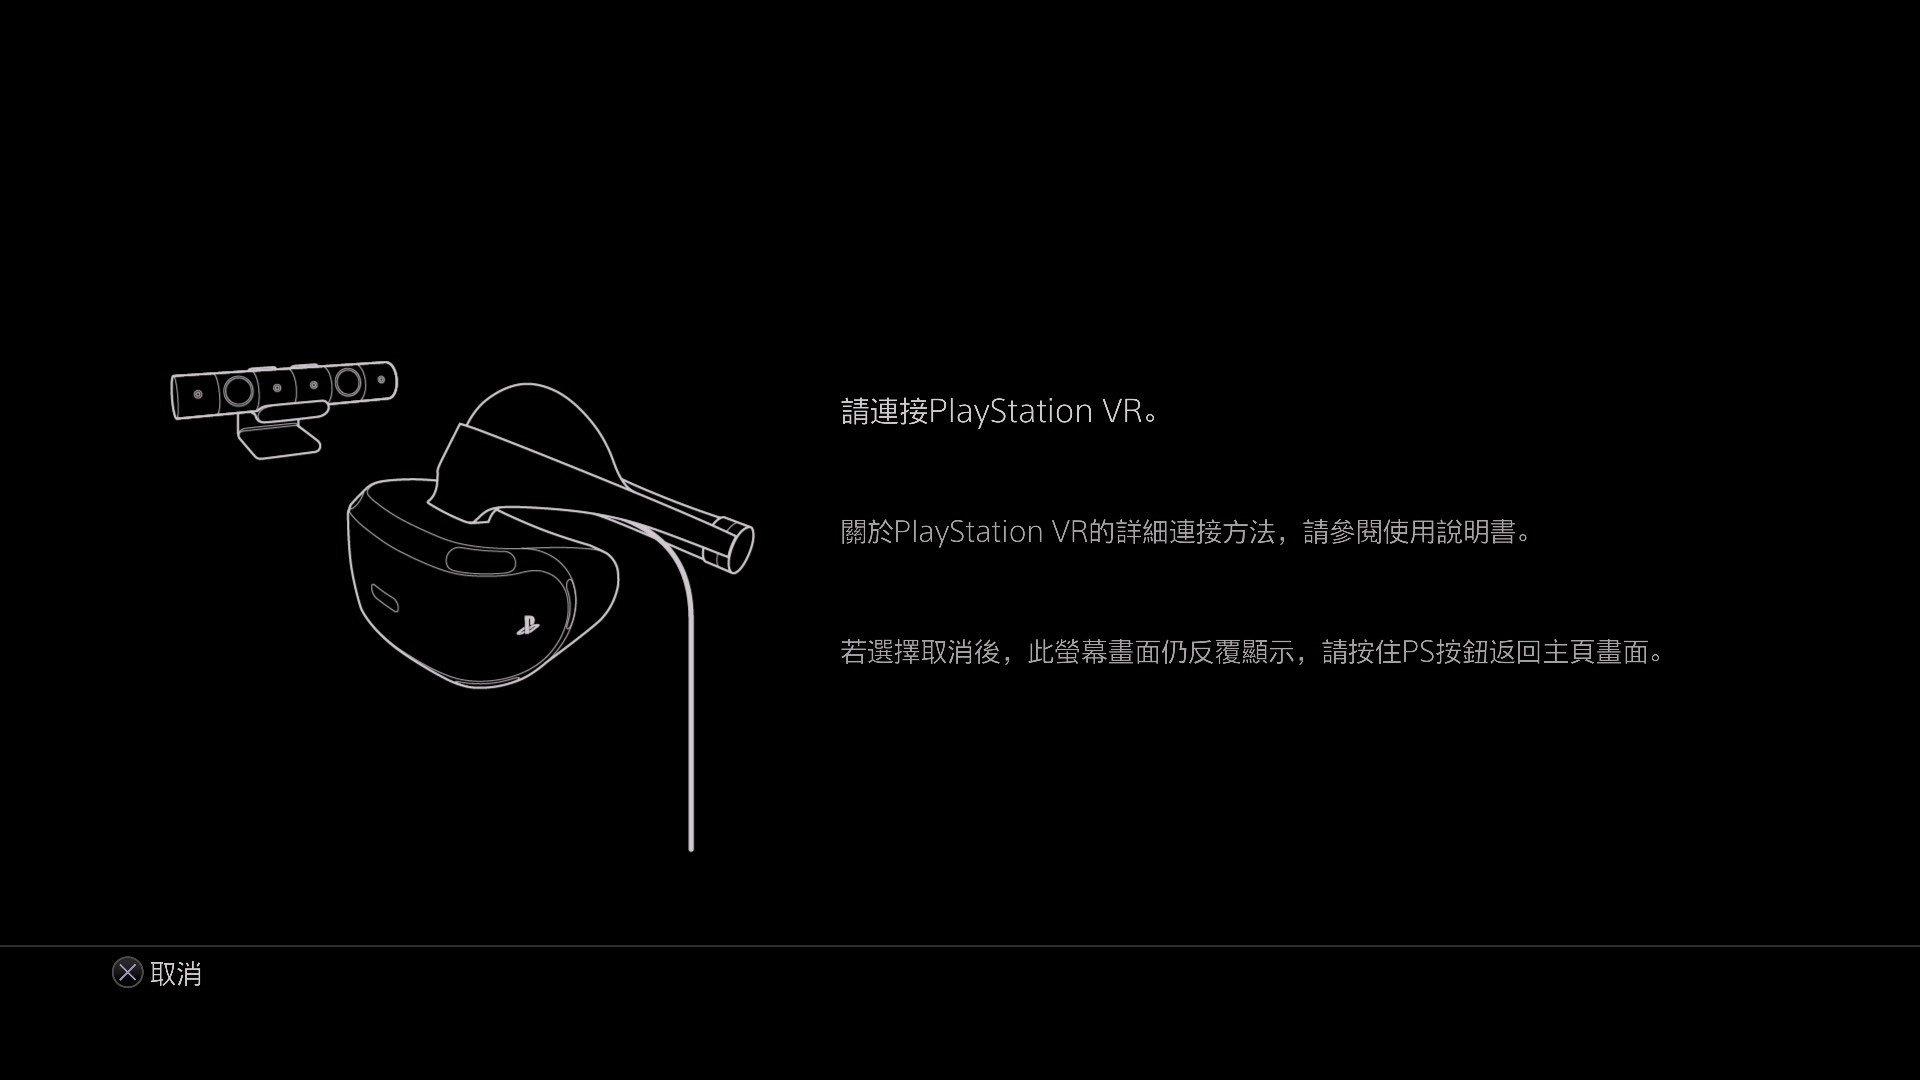 PS5 新一代虚拟实境装置 PlayStation VR2 体验报导 融合创新功能与正统进化的完成品插图30